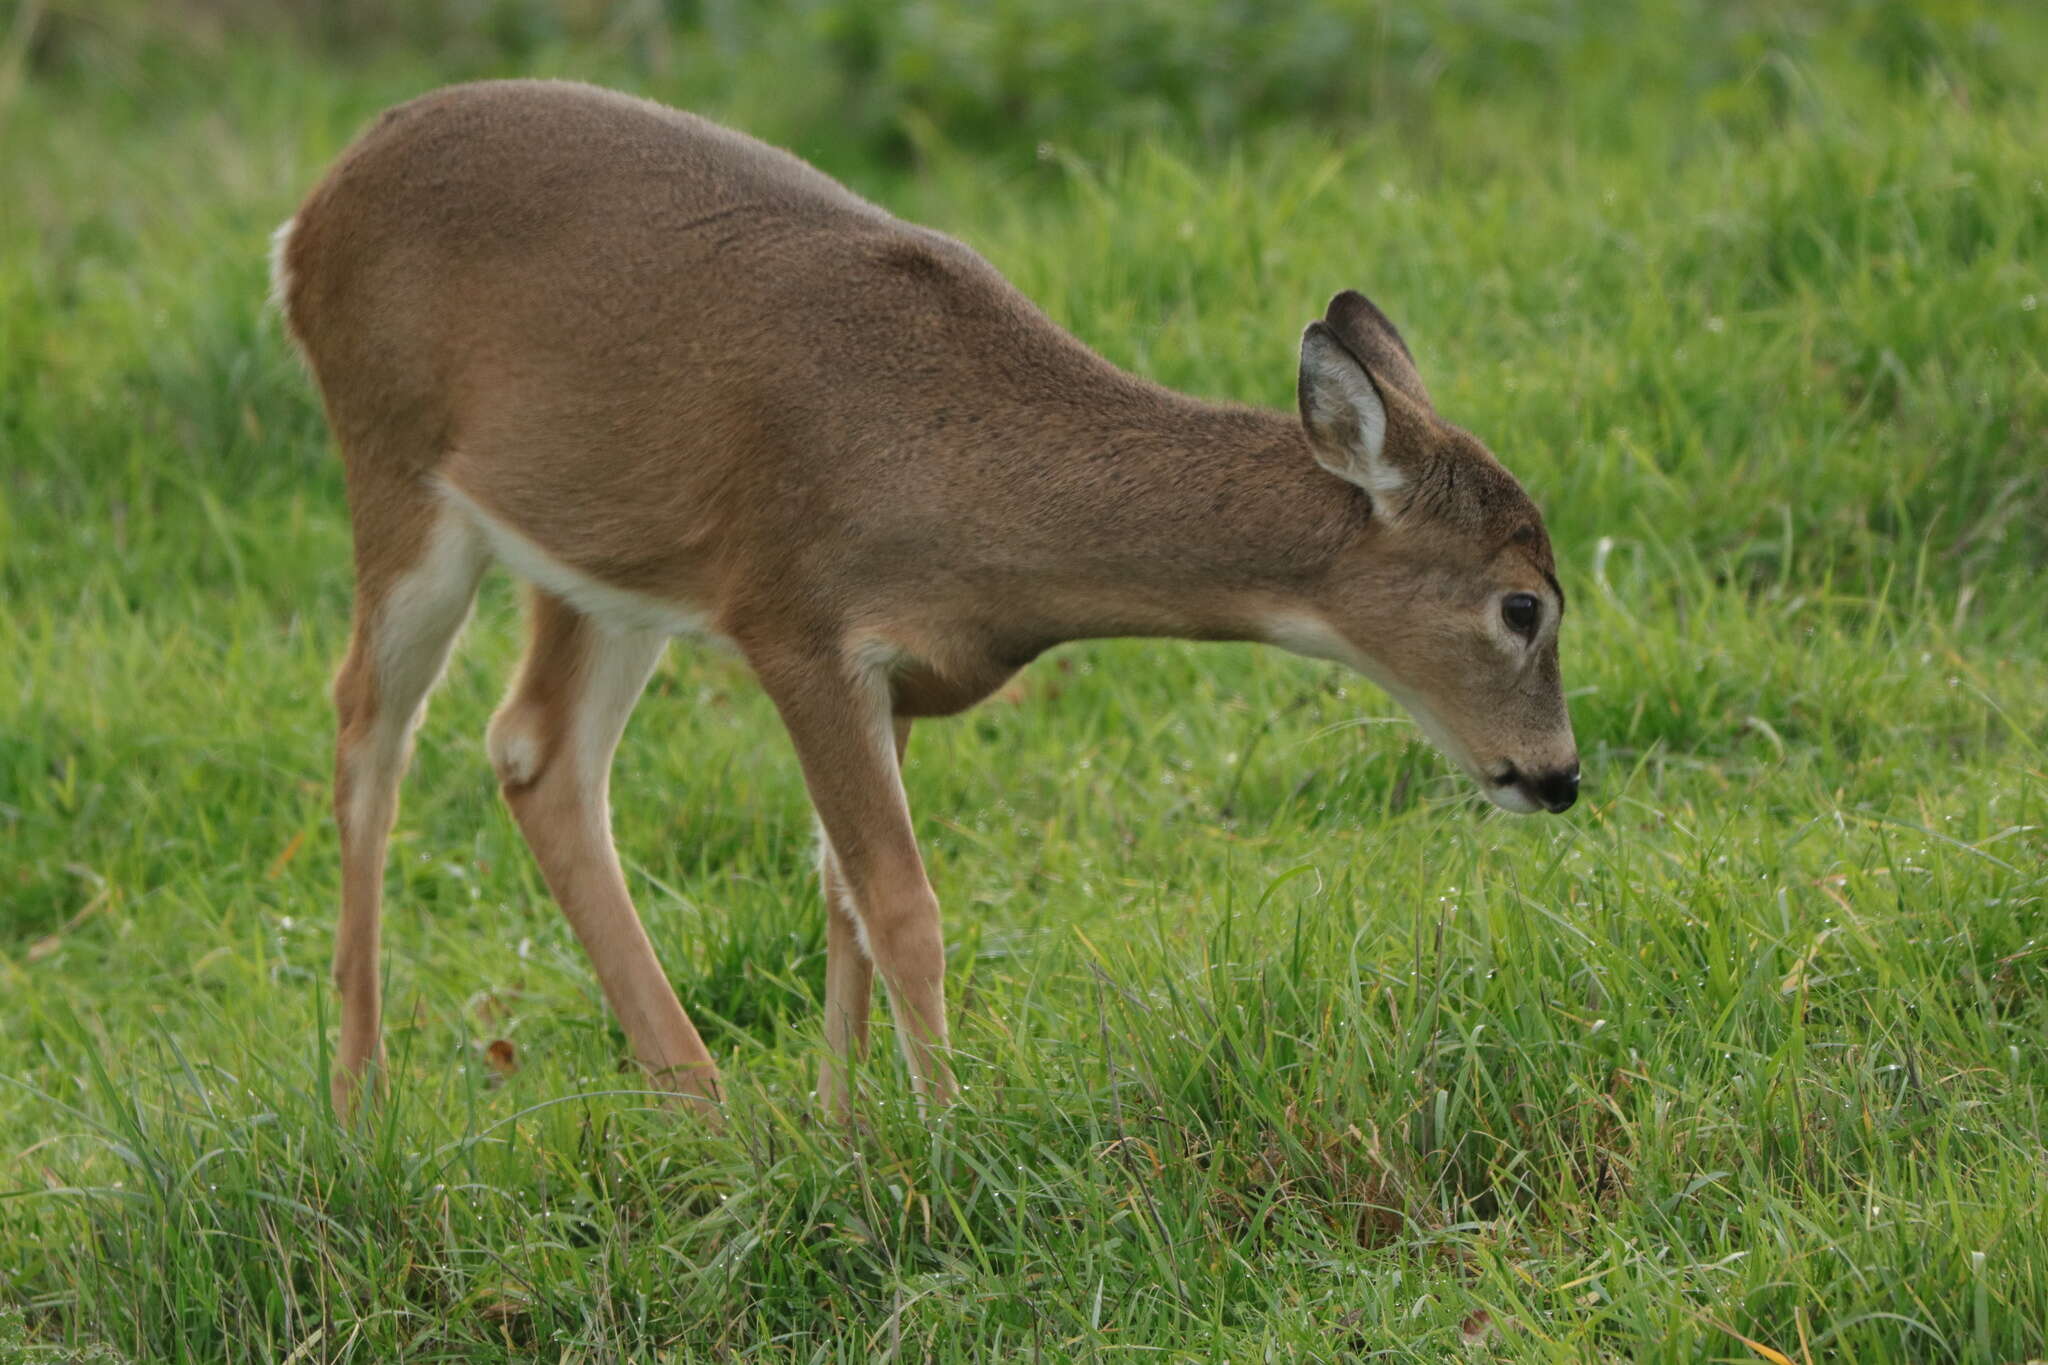 Image of Columbian white-tailed deer